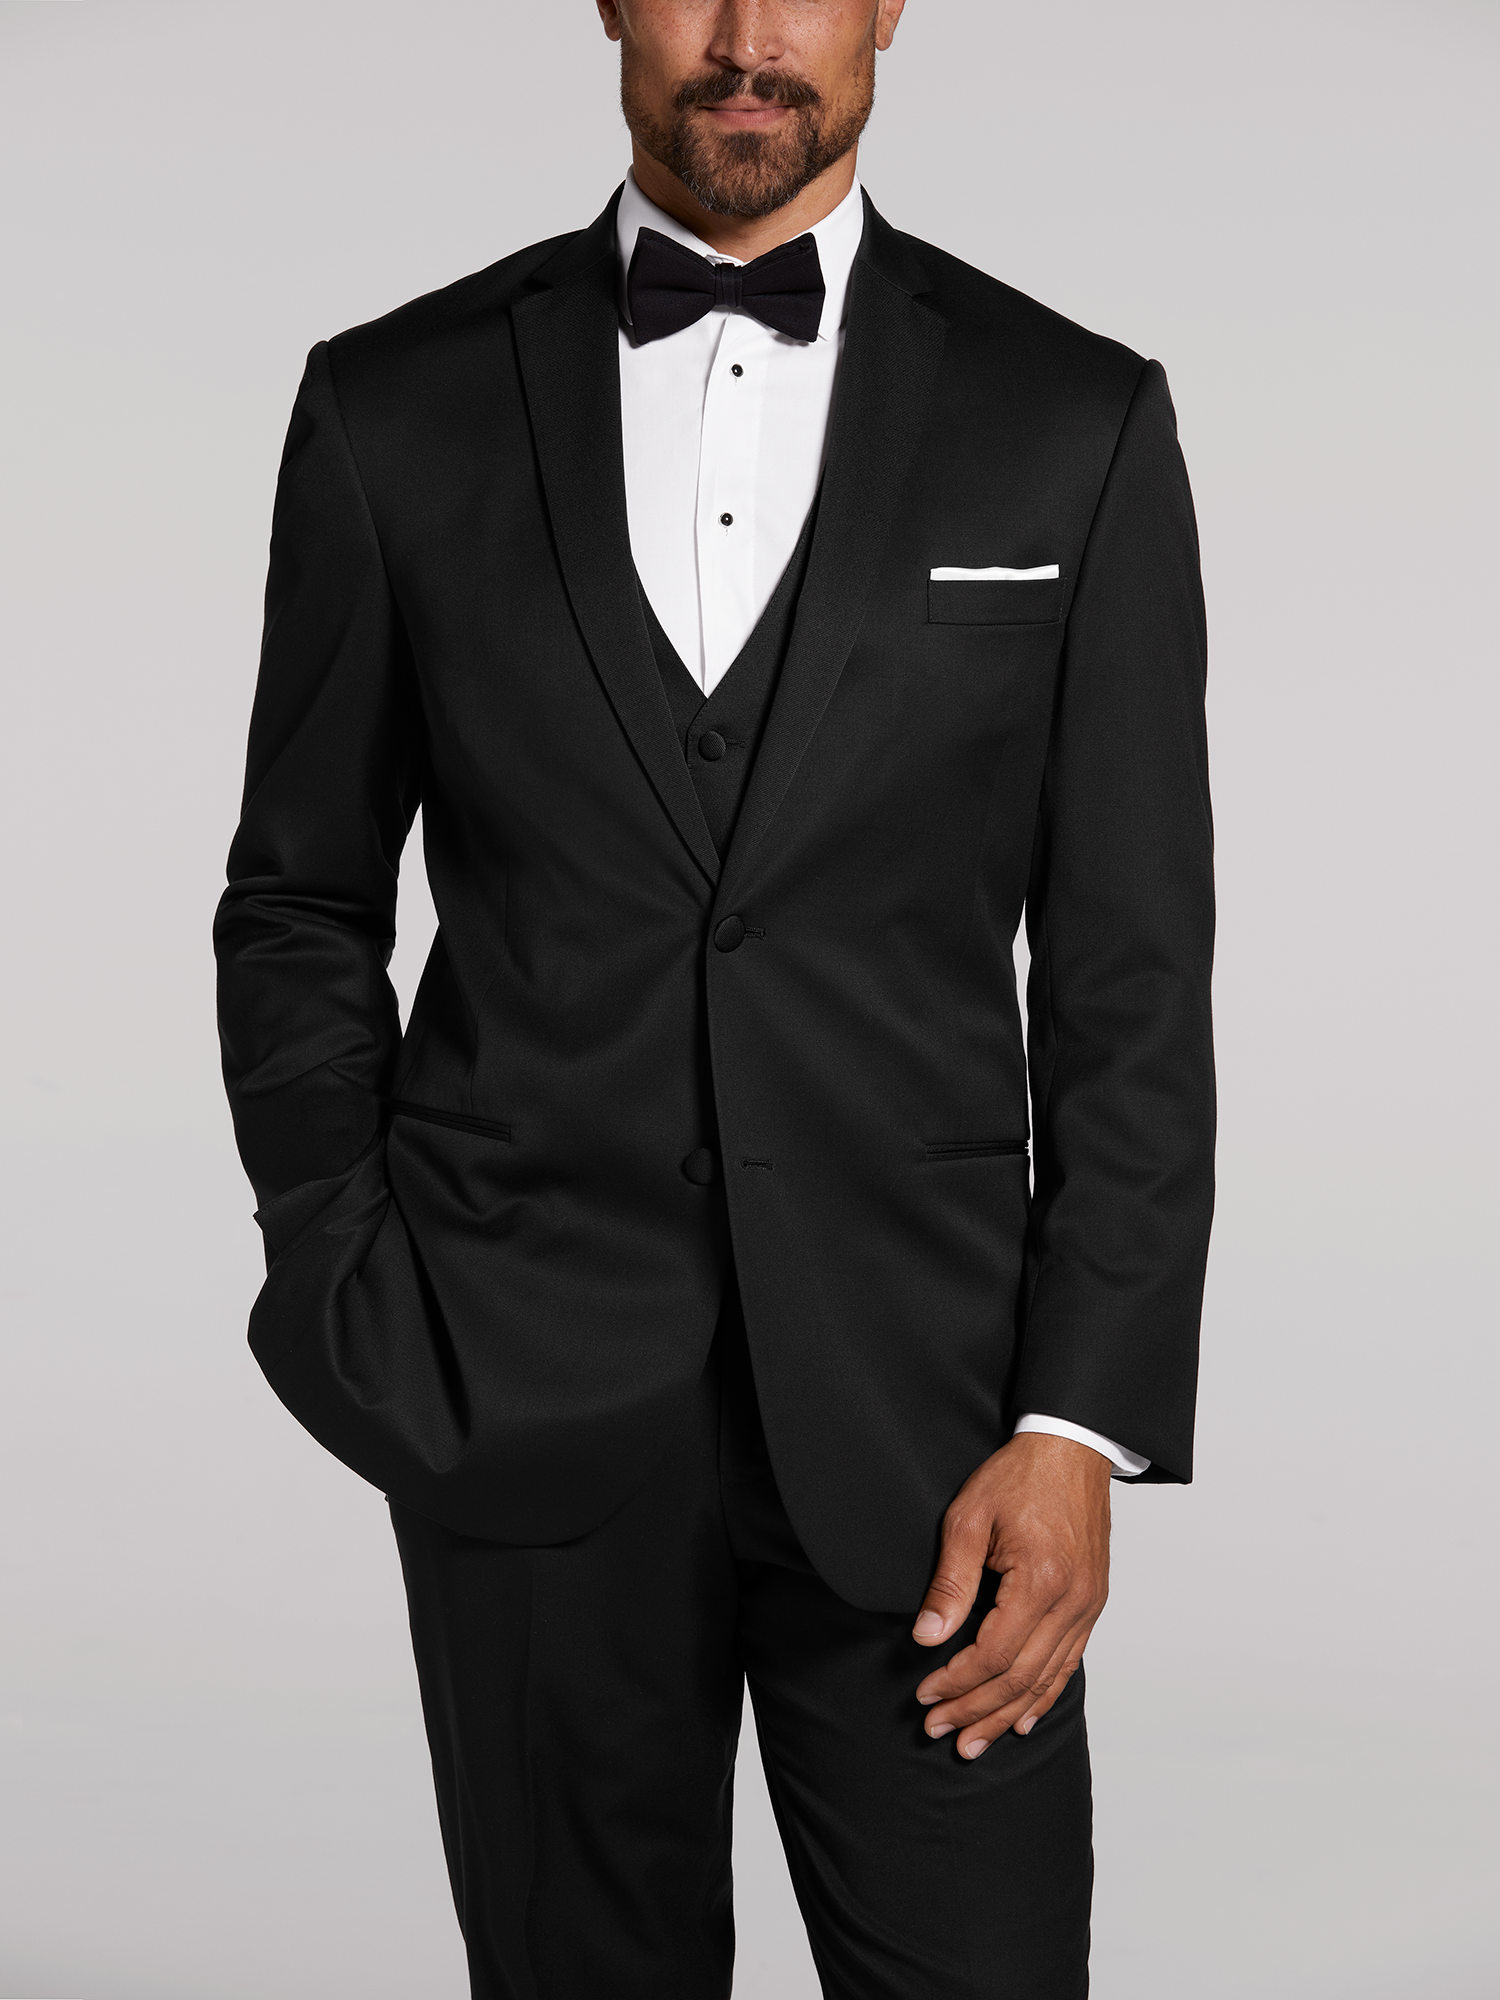 Hipbow 2.0 for black tuxedo/suit